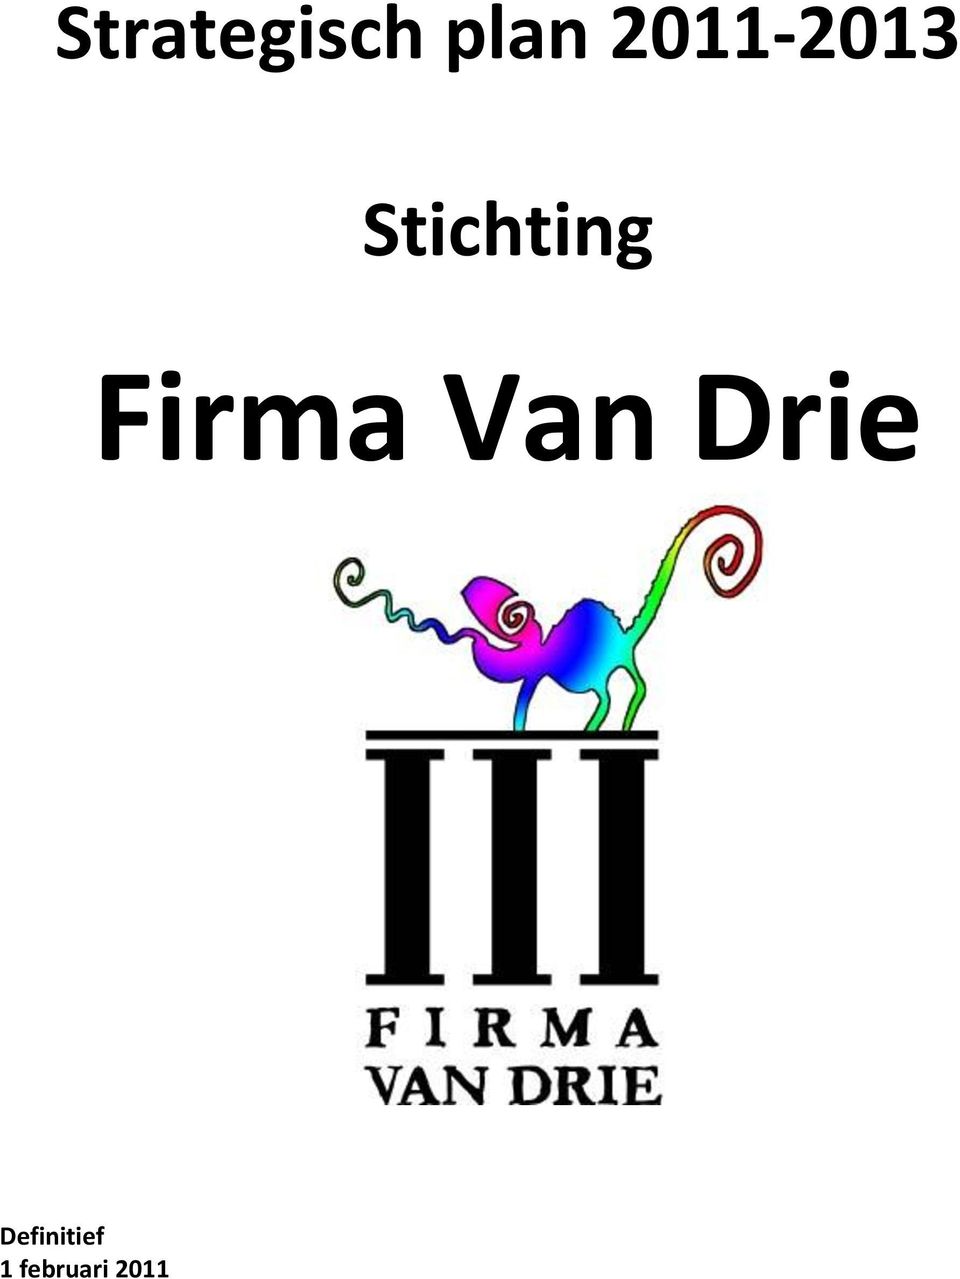 Firma Van Drie